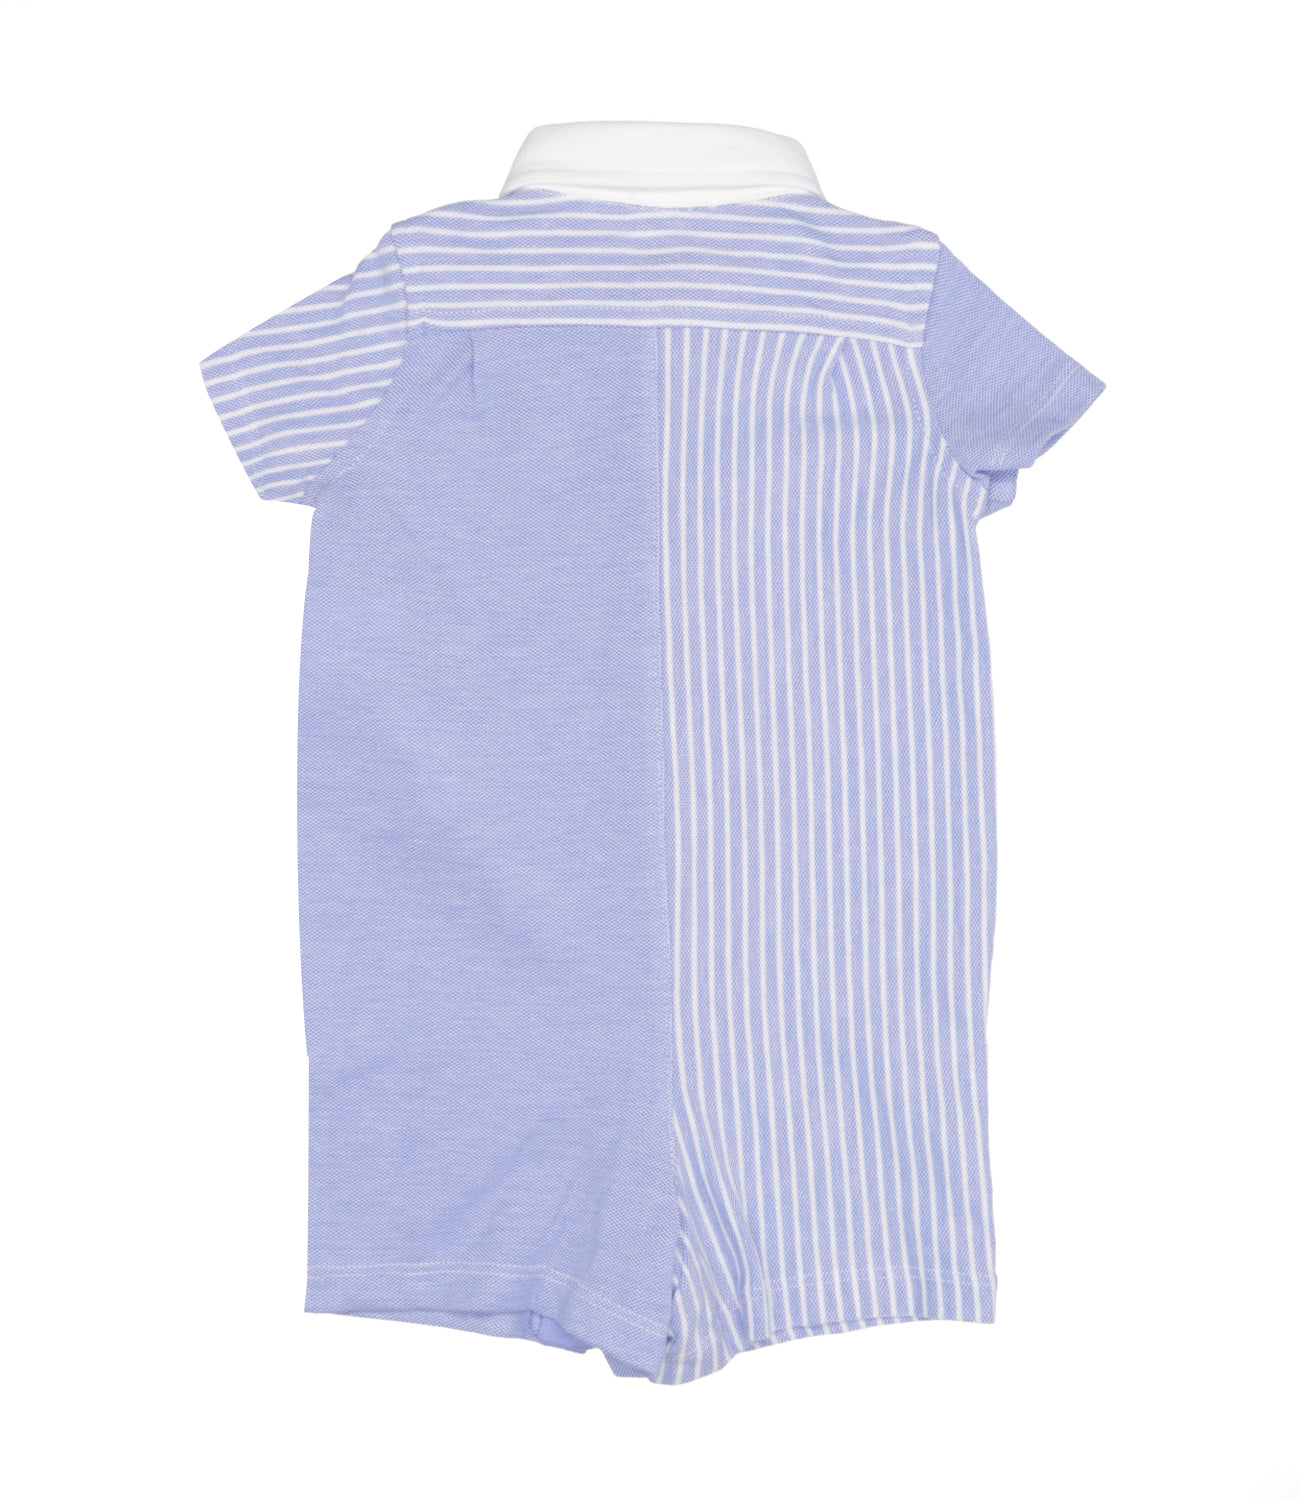 Ralph Lauren Childrenswear | Light Blue and White Sleepsuit